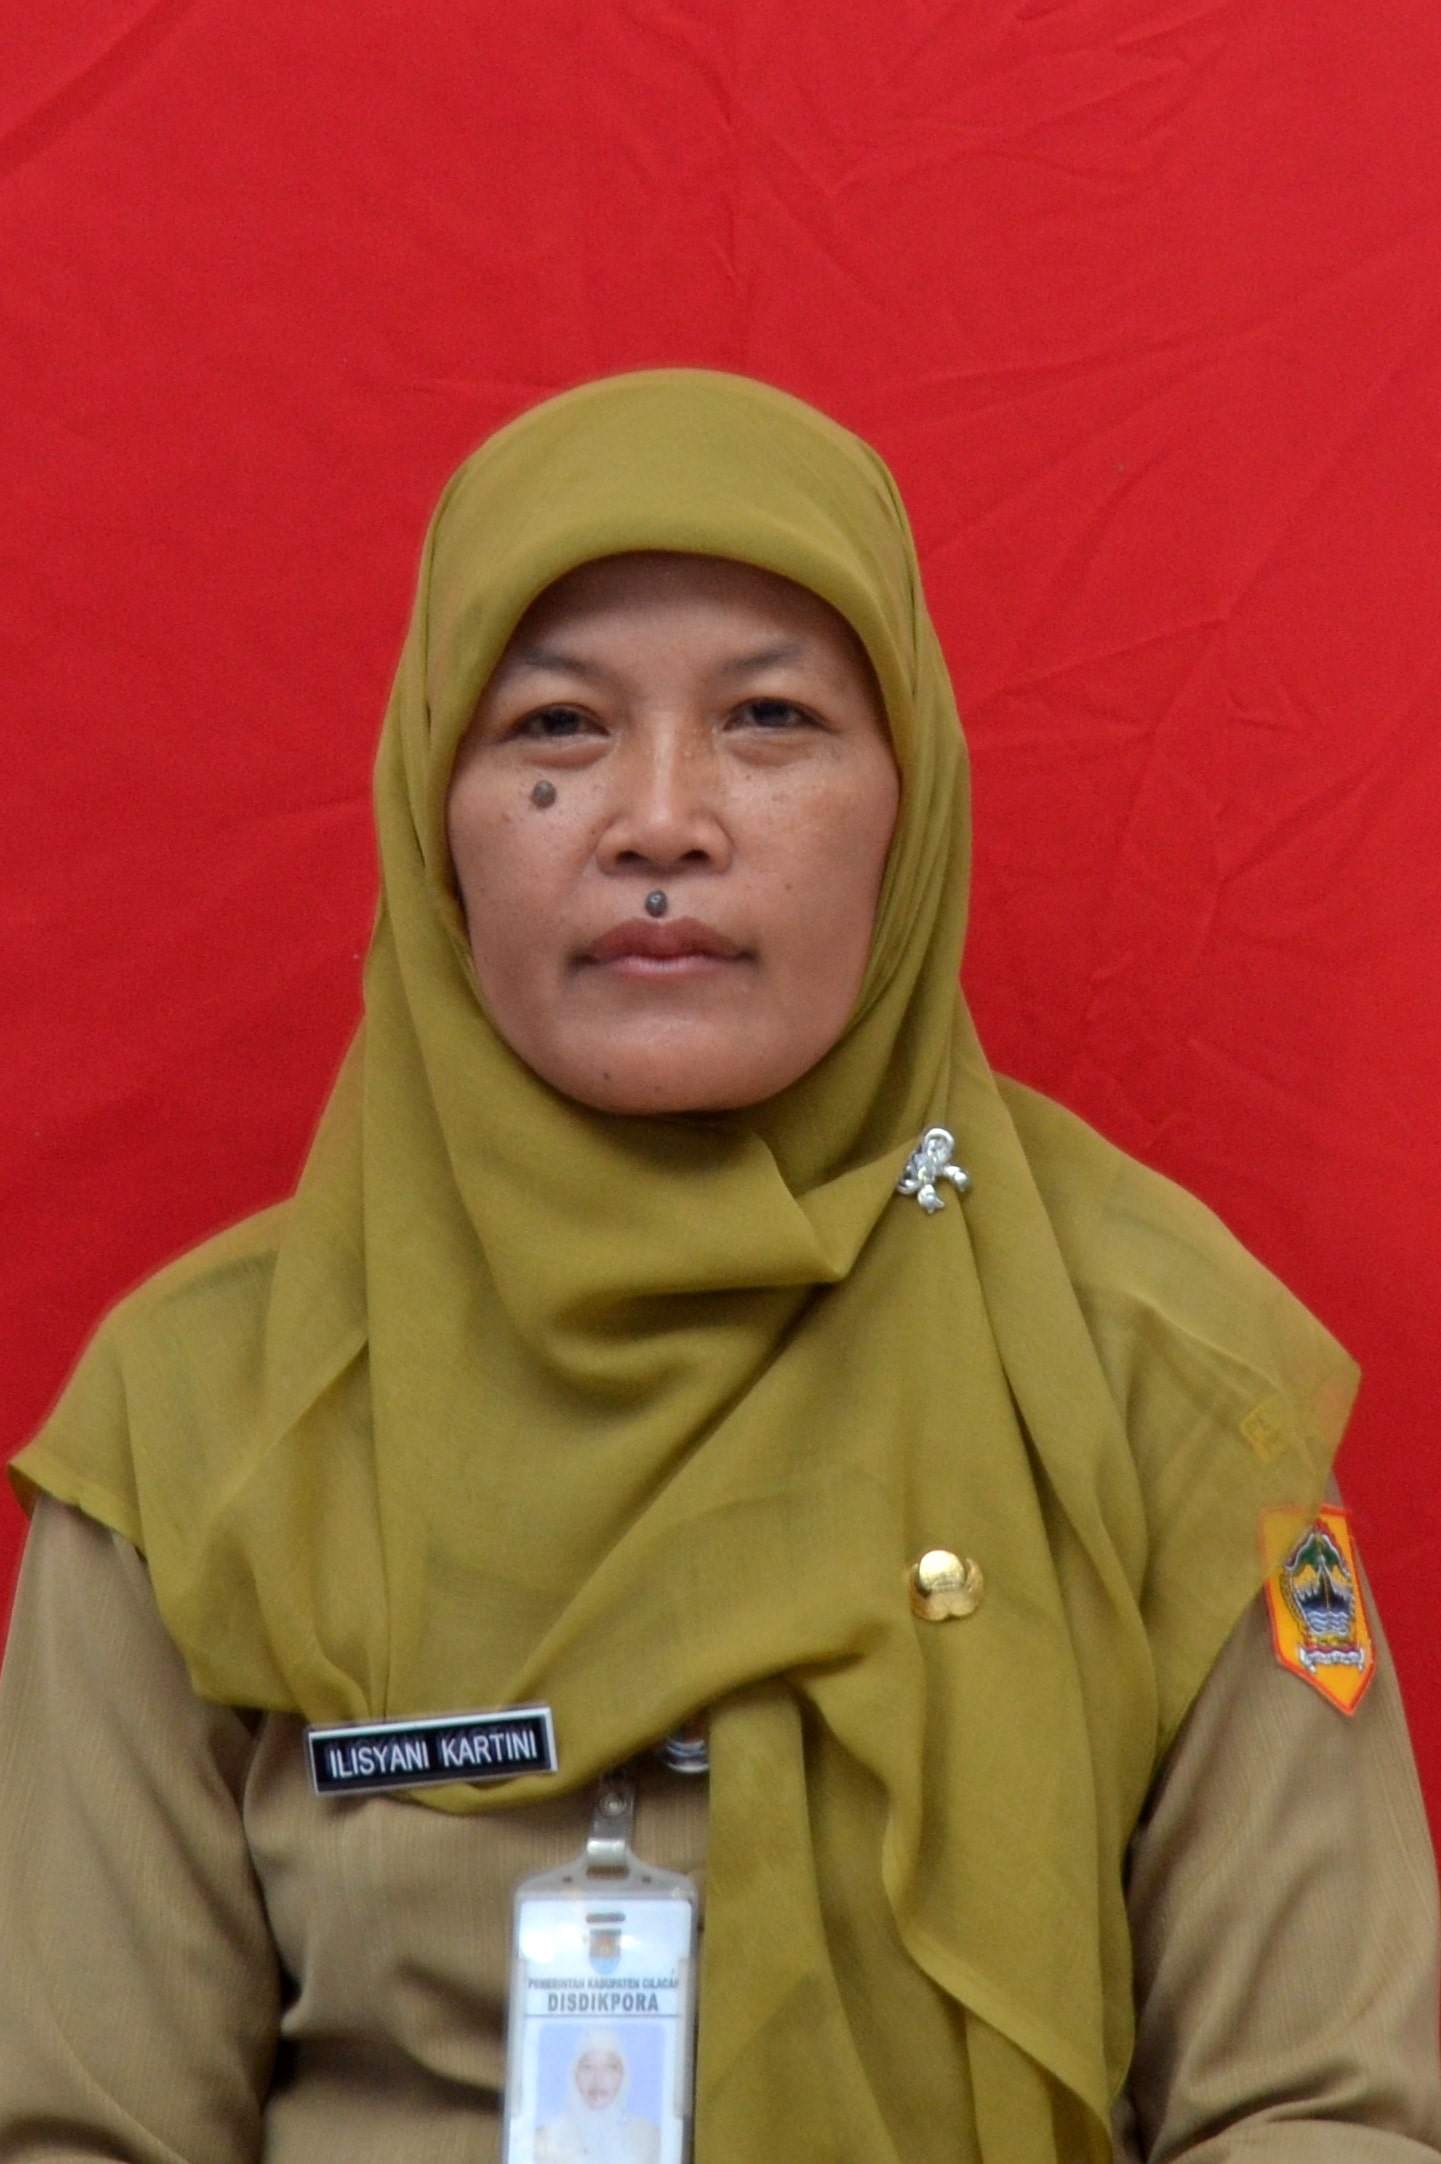 Dra. Ilisyani Kartini